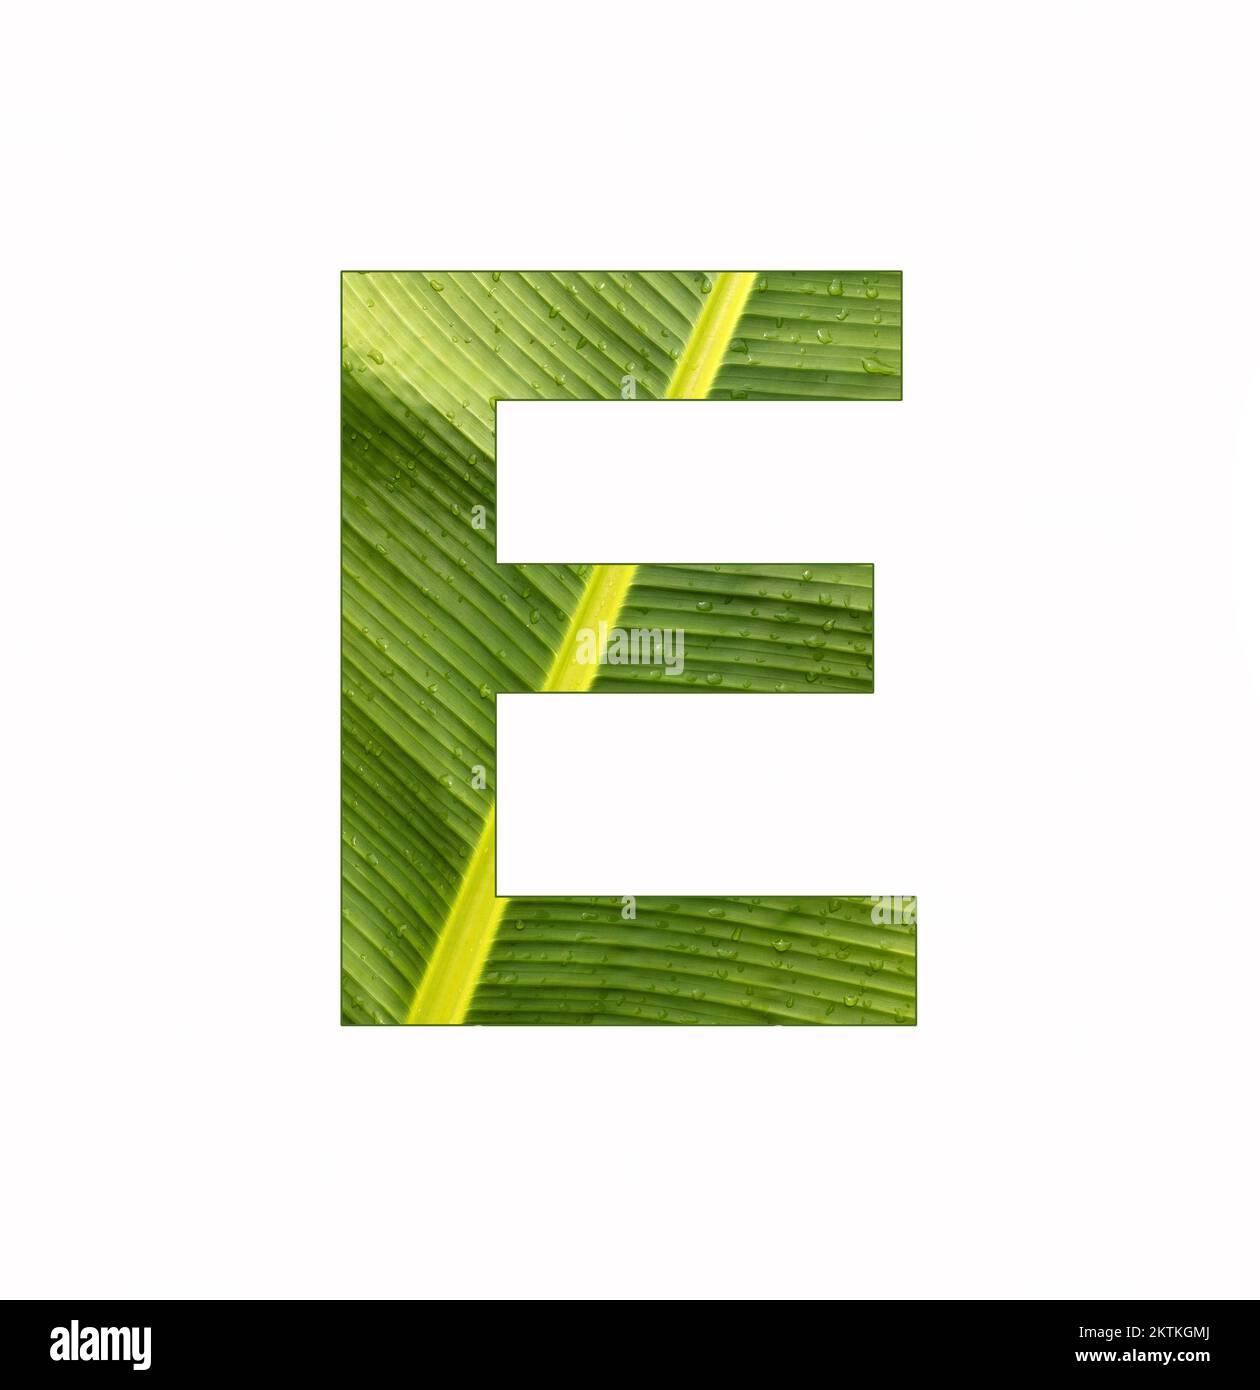 Alphabet Letter E - Banana plant leaf background Stock Photo